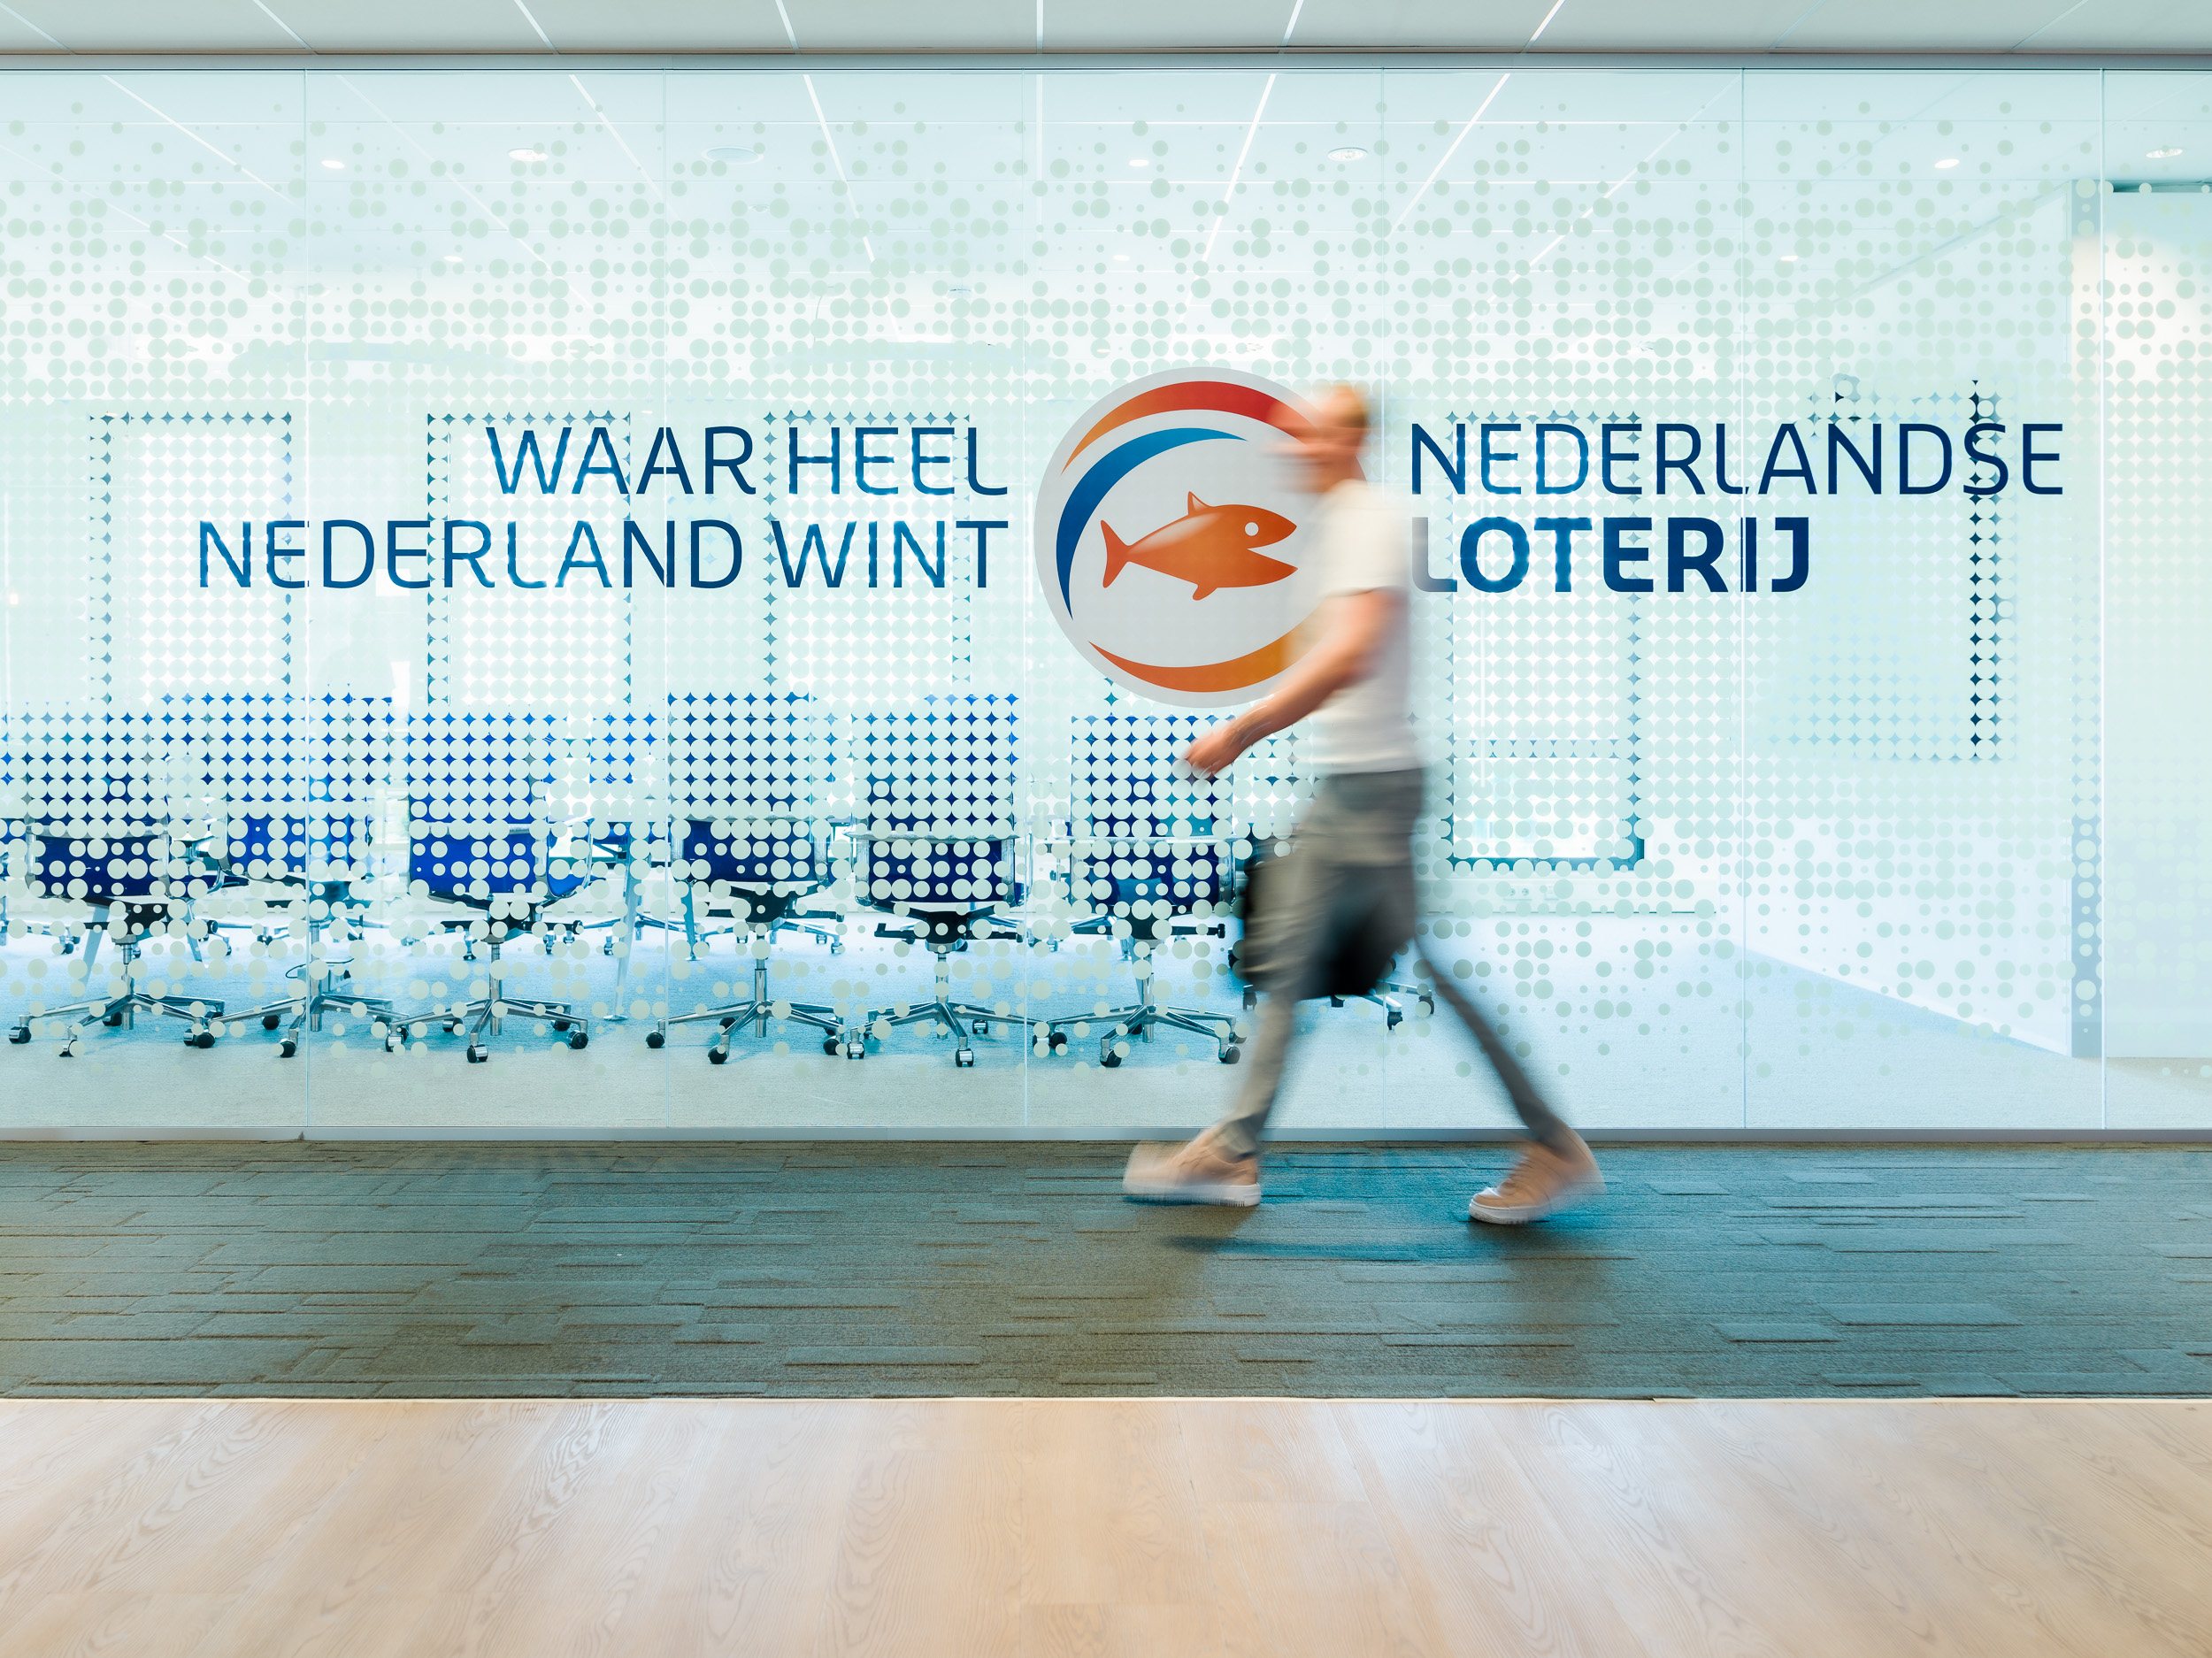 Tim talks about working for Nederlandse Loterij: never a dull moment